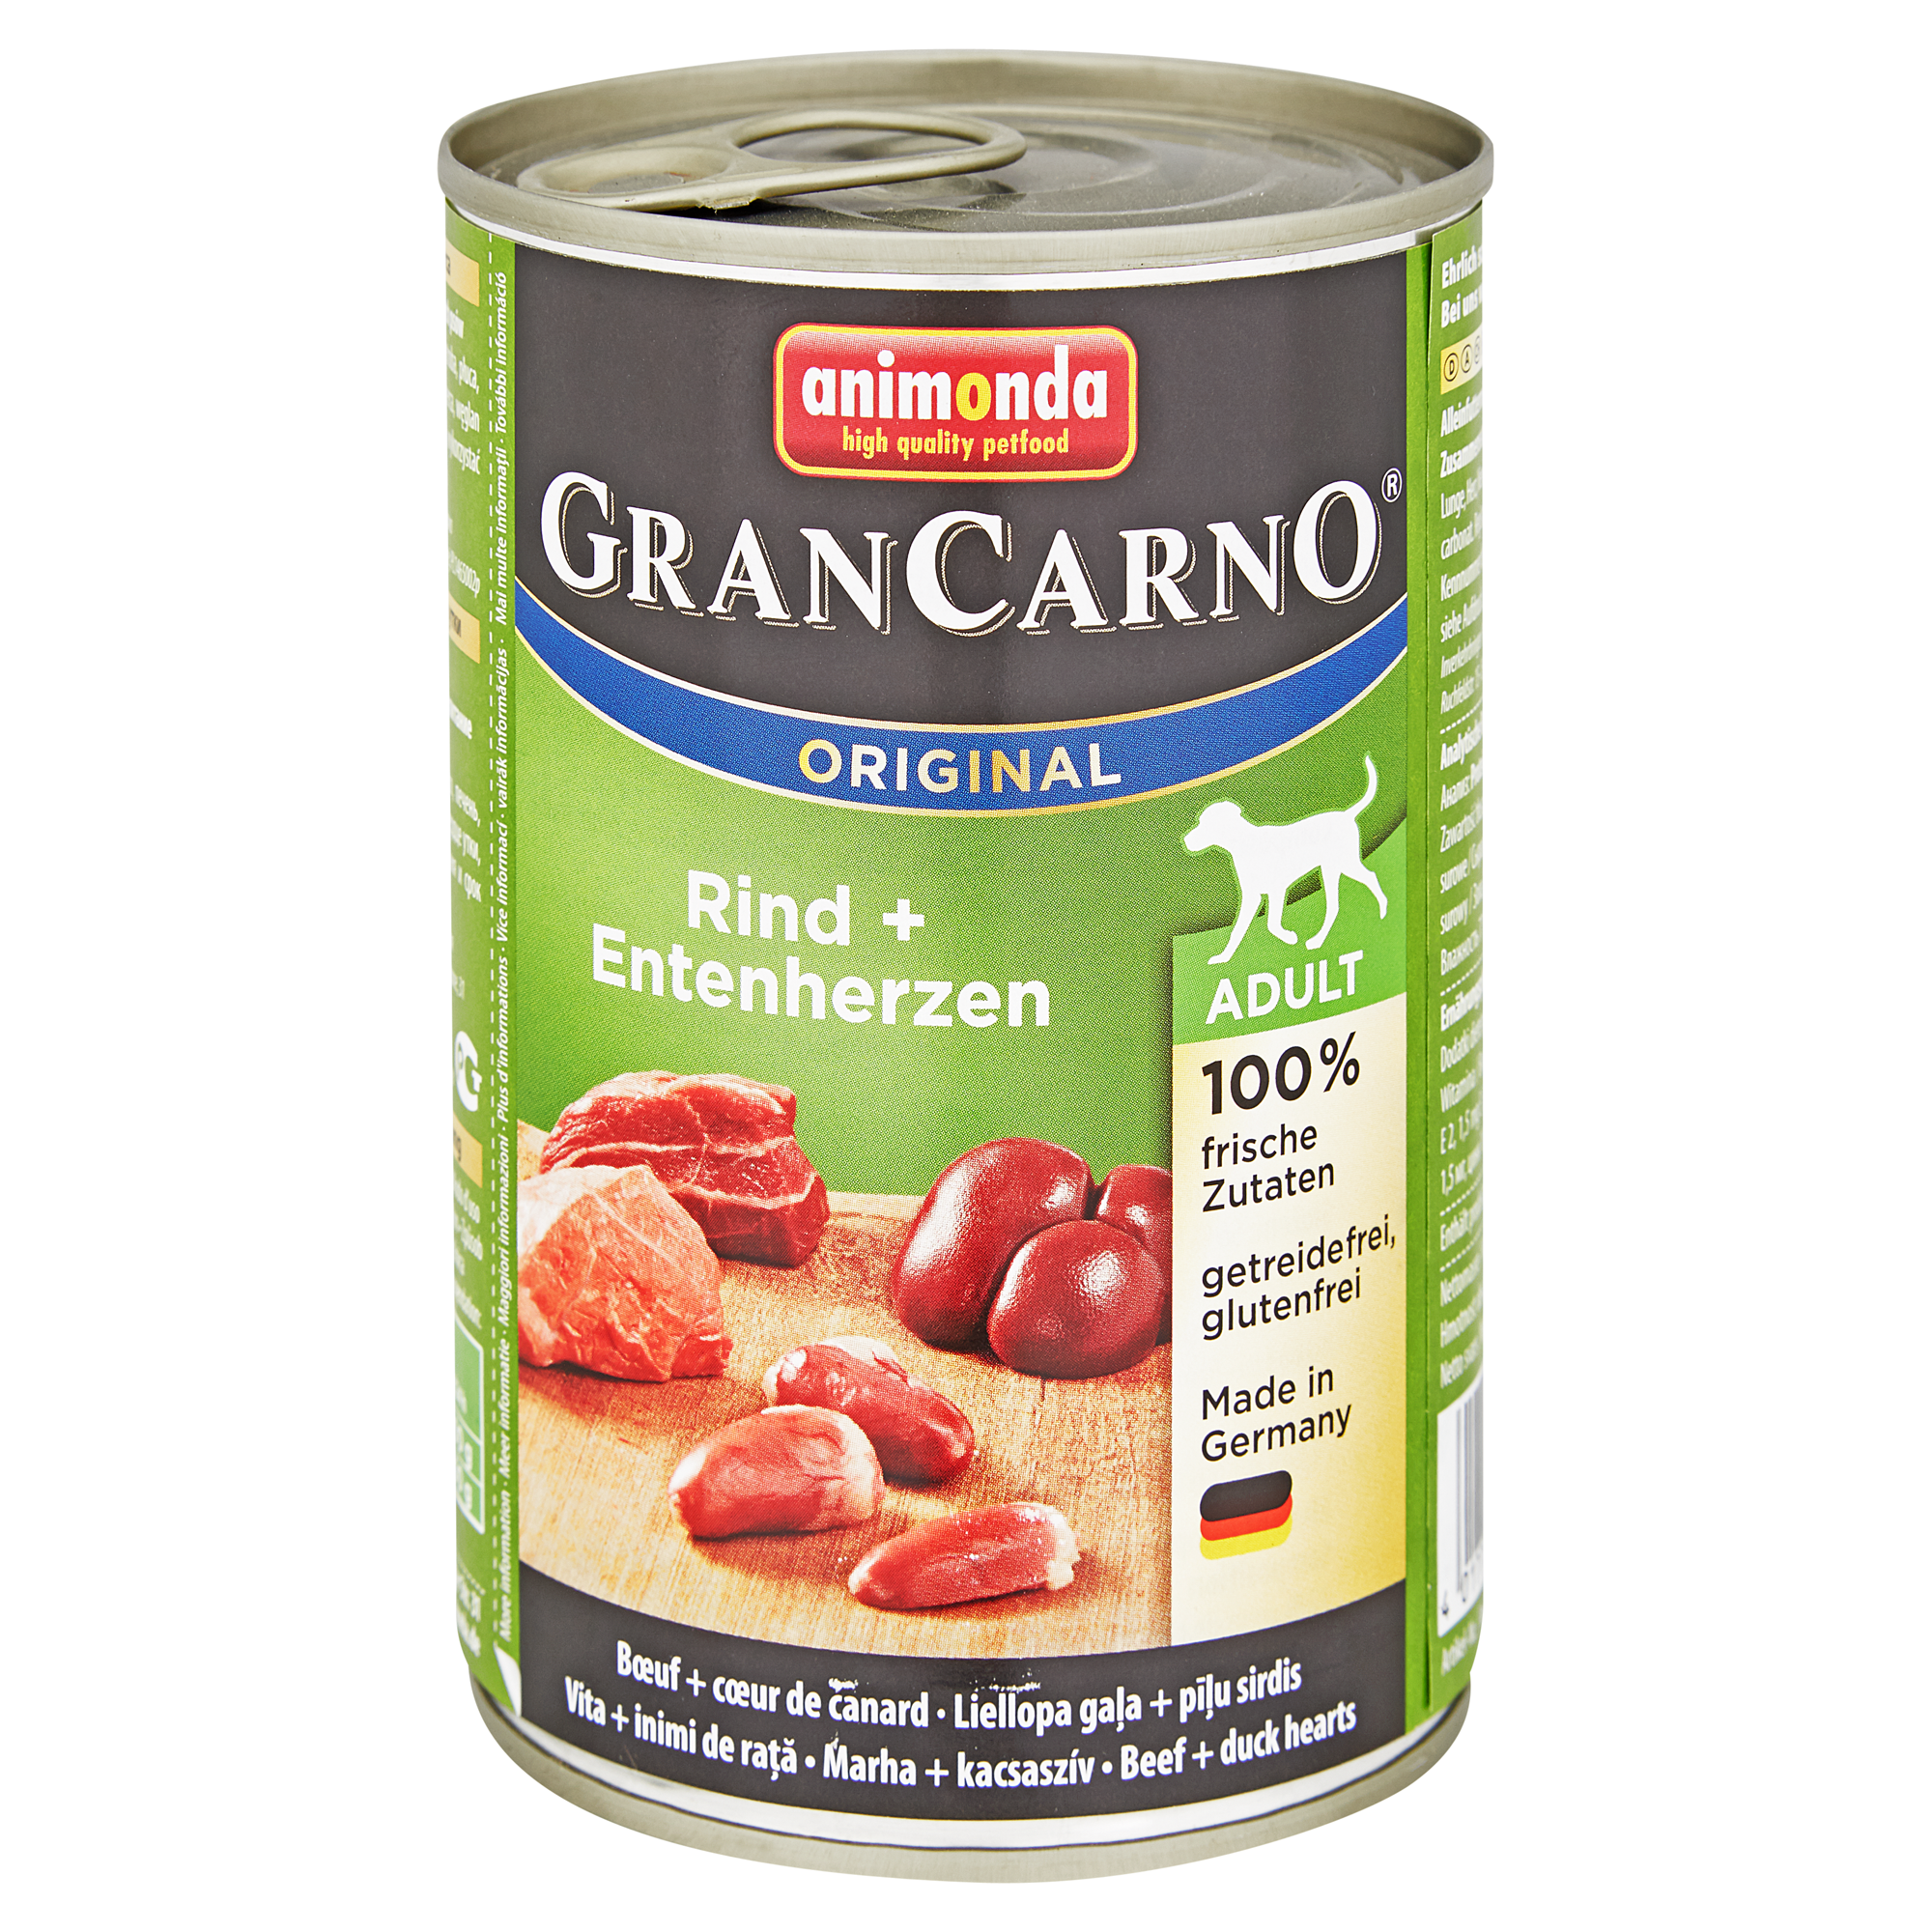 Hundenassfutter "Gran Carno" Orginal mit Rind/Entenherzen 400 g + product picture